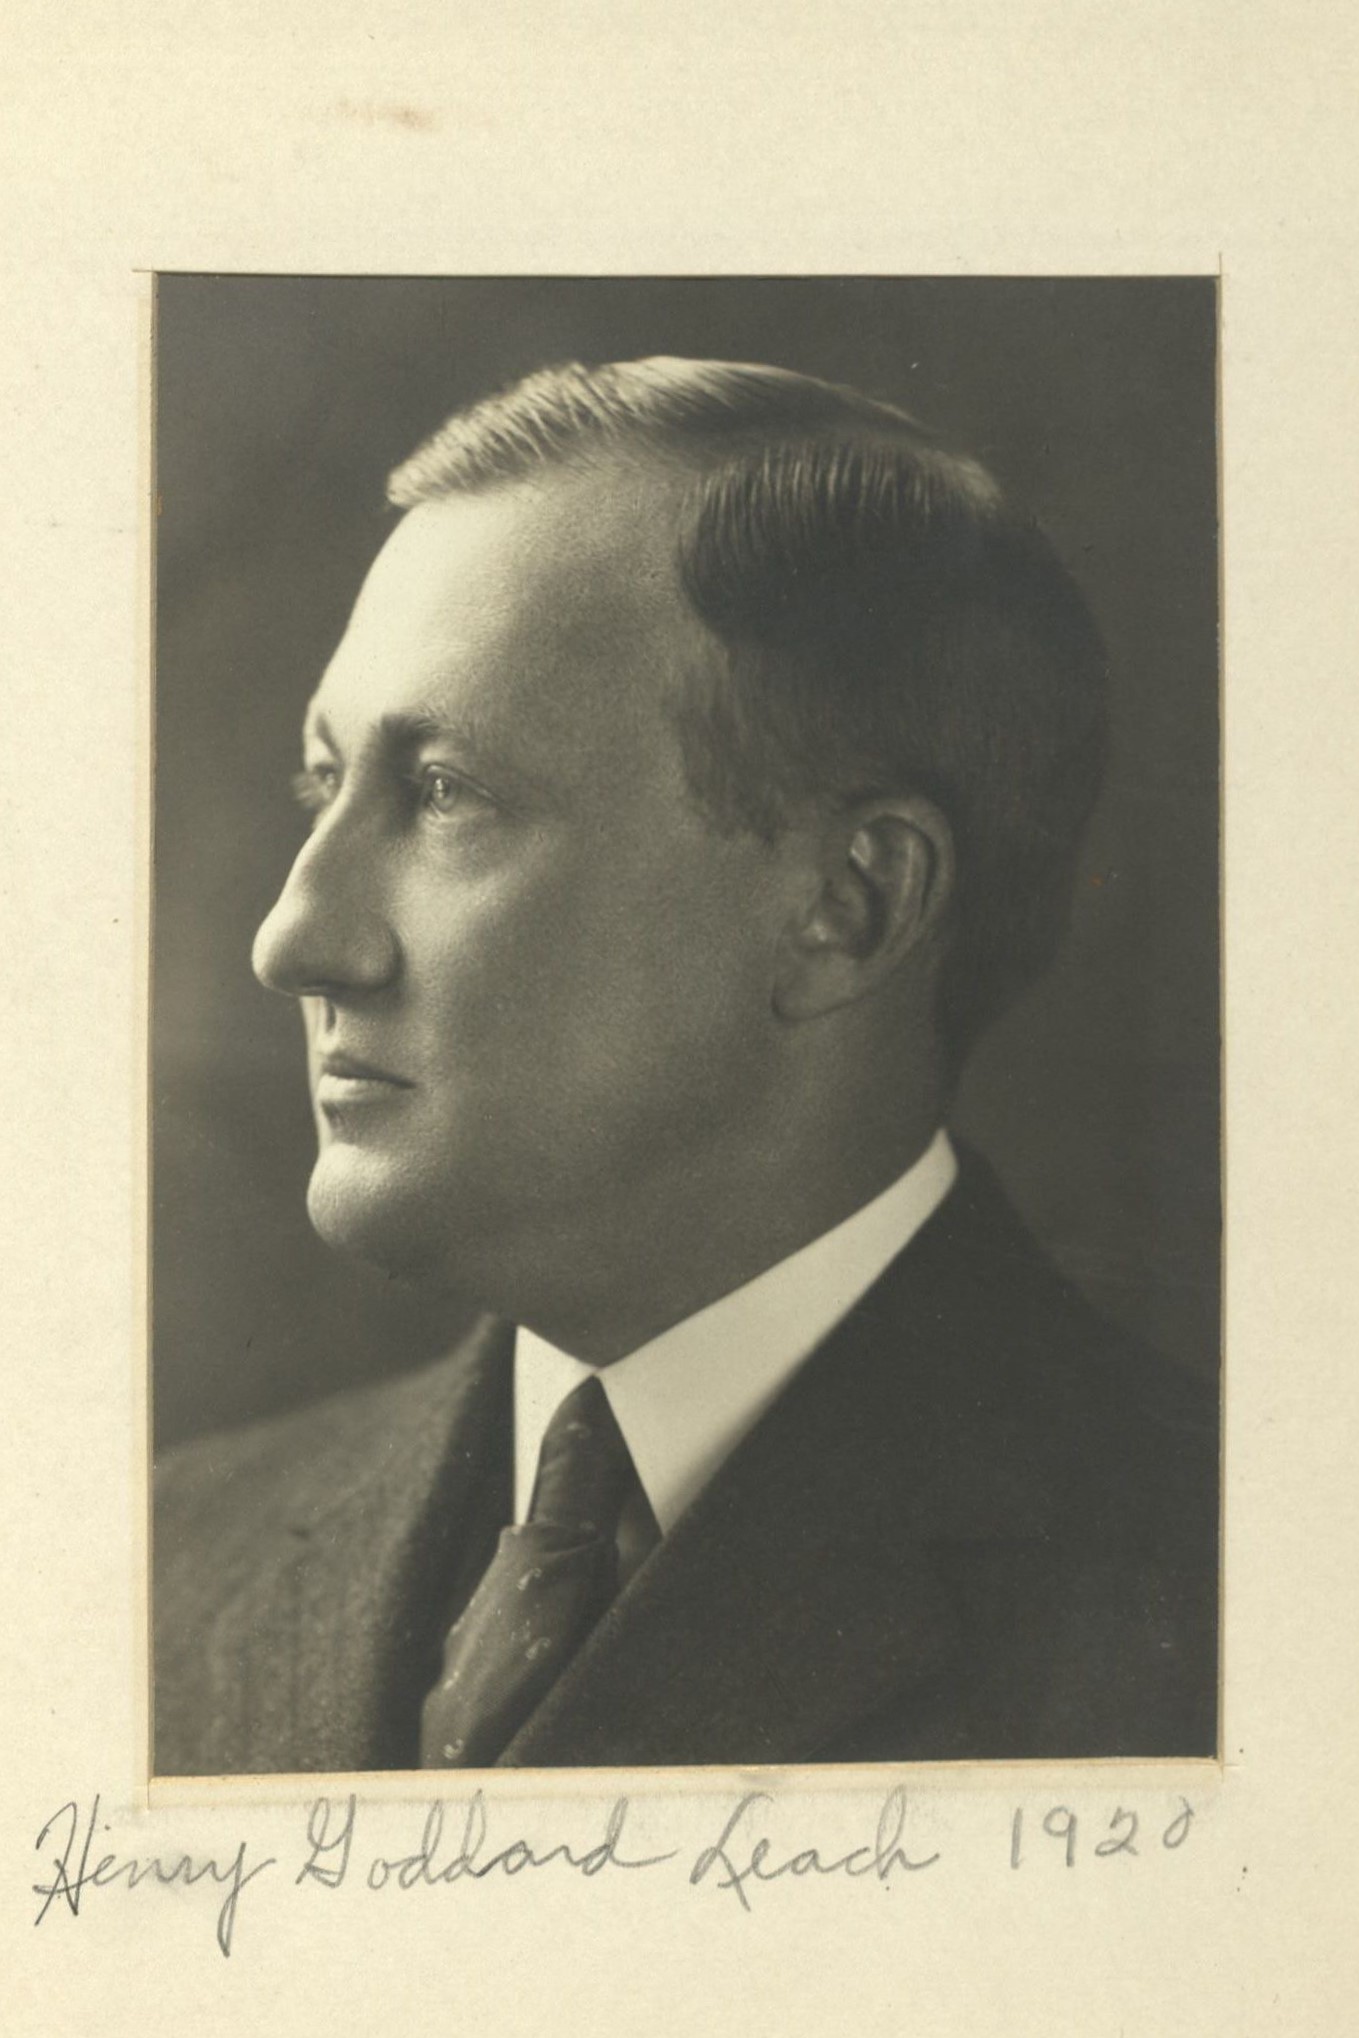 Member portrait of Henry Goddard Leach